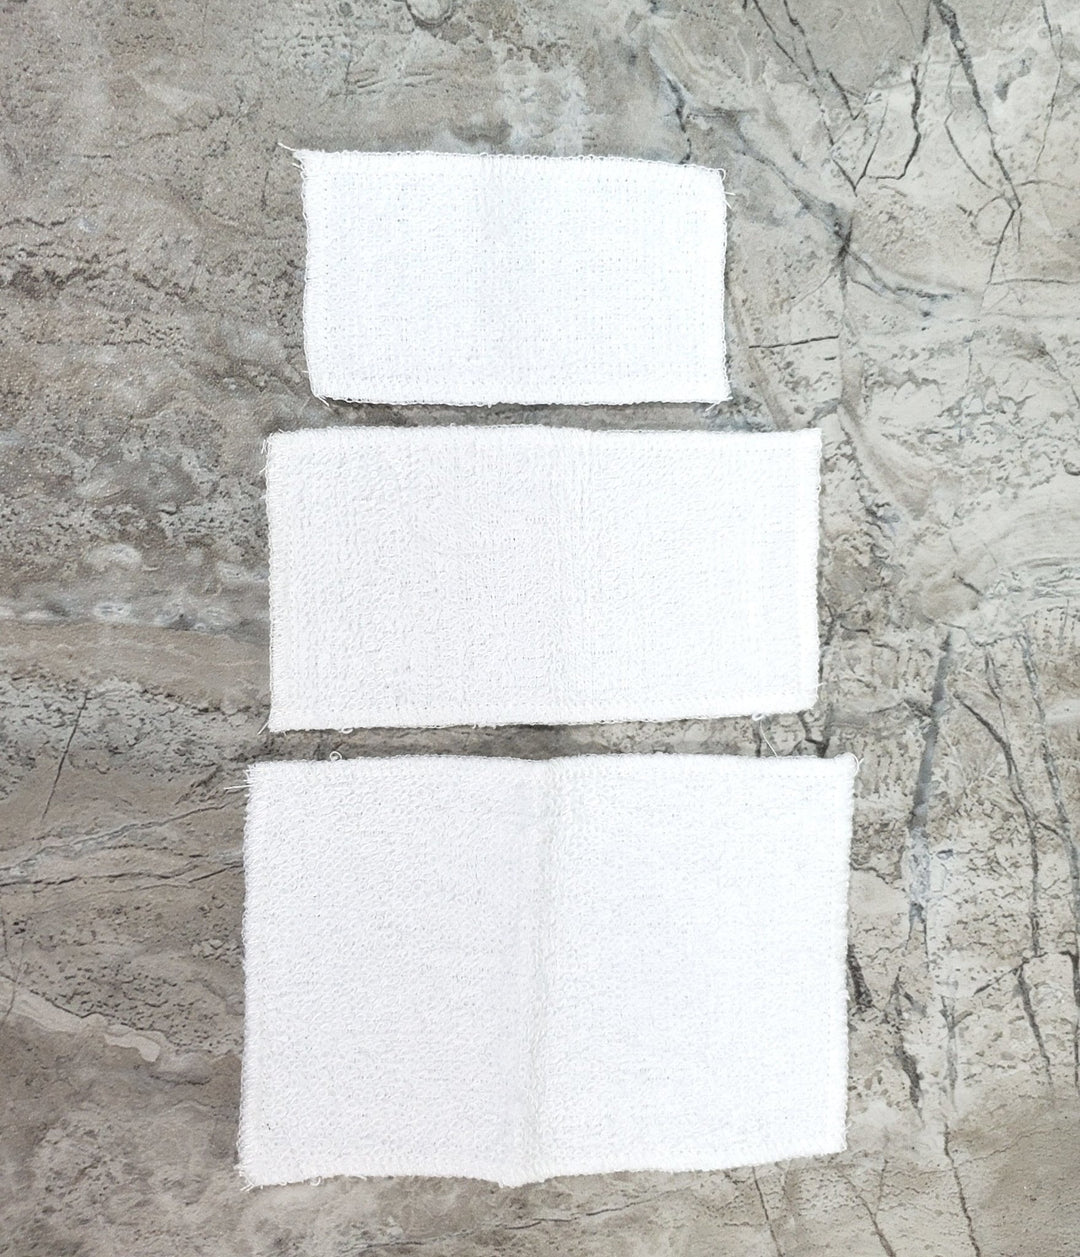 Dollhouse White Towels Set of 3 Bath or Beach 1:12 Scale Miniature Bathroom - Miniature Crush